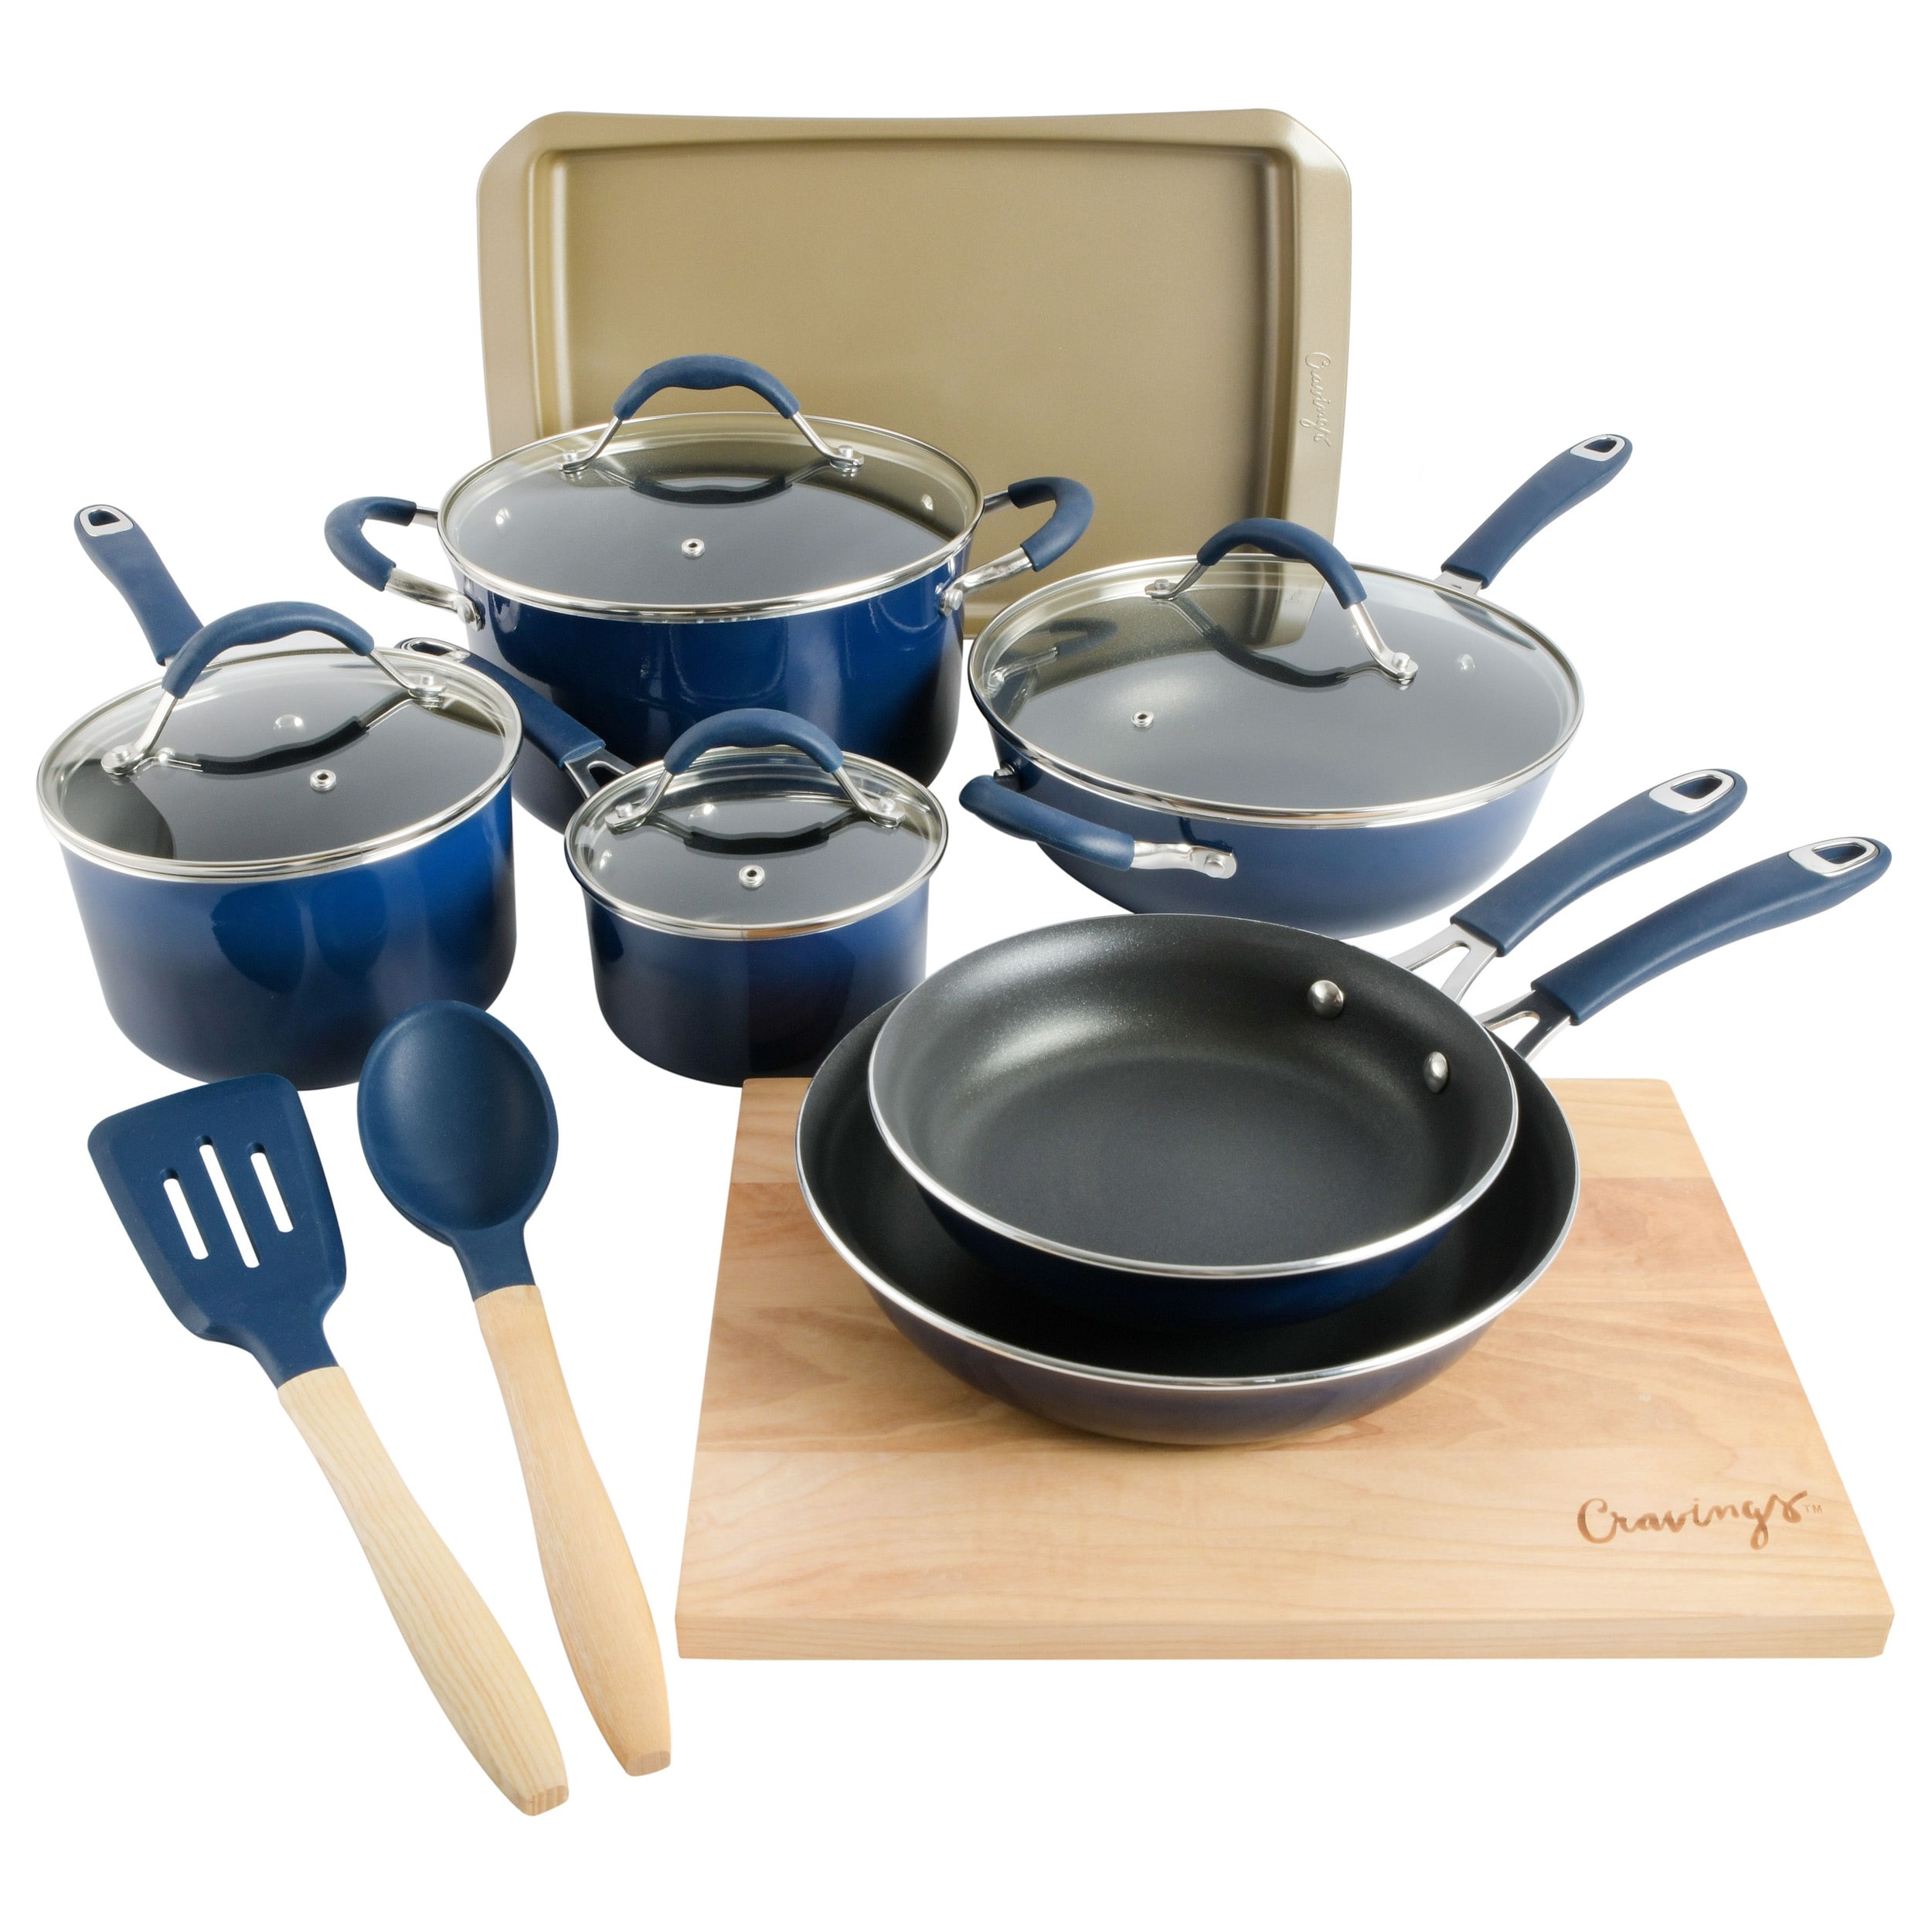  Country Kitchen Induction Cookware Sets - 13 Piece Nonstick  Cast Aluminum Pots and Pans with BAKELITE Handles, Glass Lids (Navy) :  Patio, Lawn & Garden